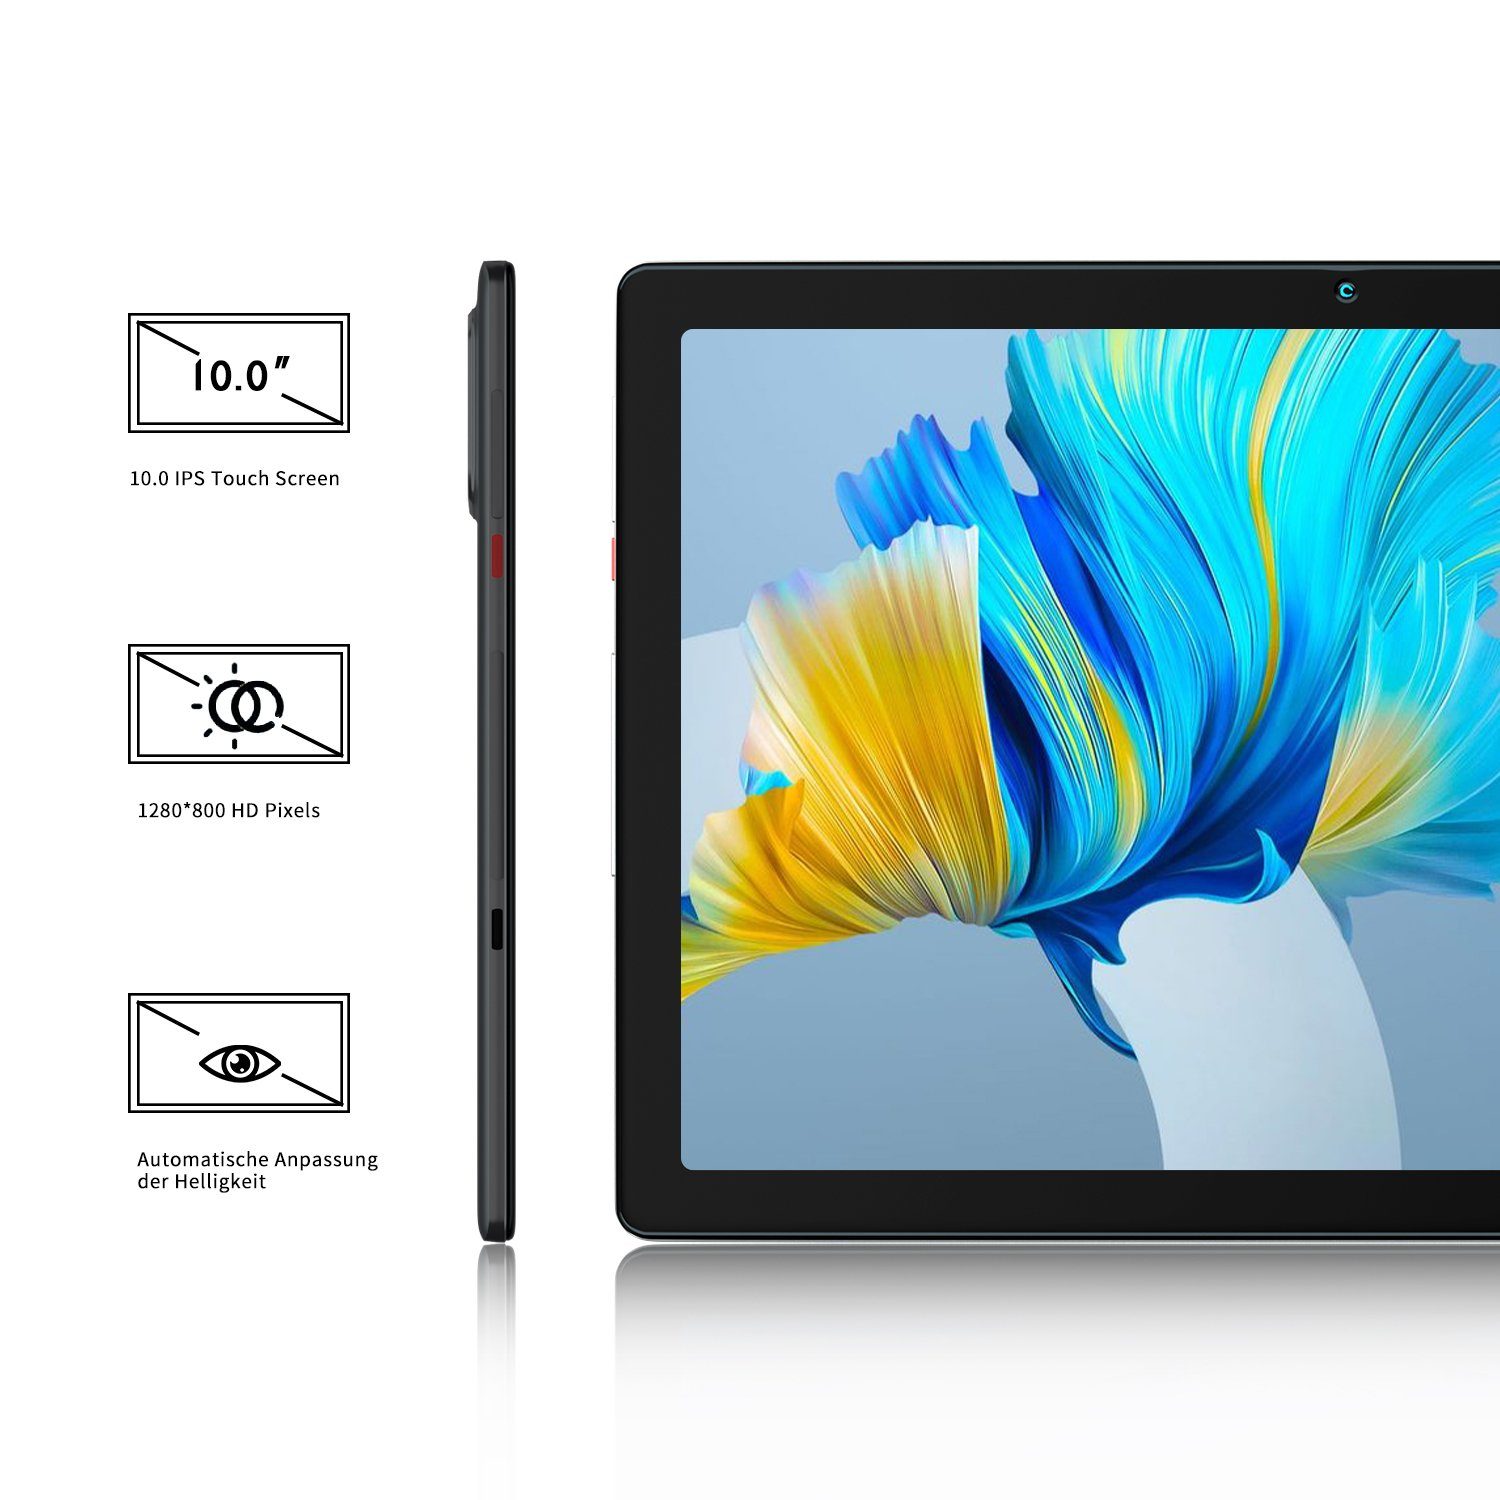 GB, 12, BUFO grau MB1001 32 Android Auflösung) Tablet (10,1", hohe